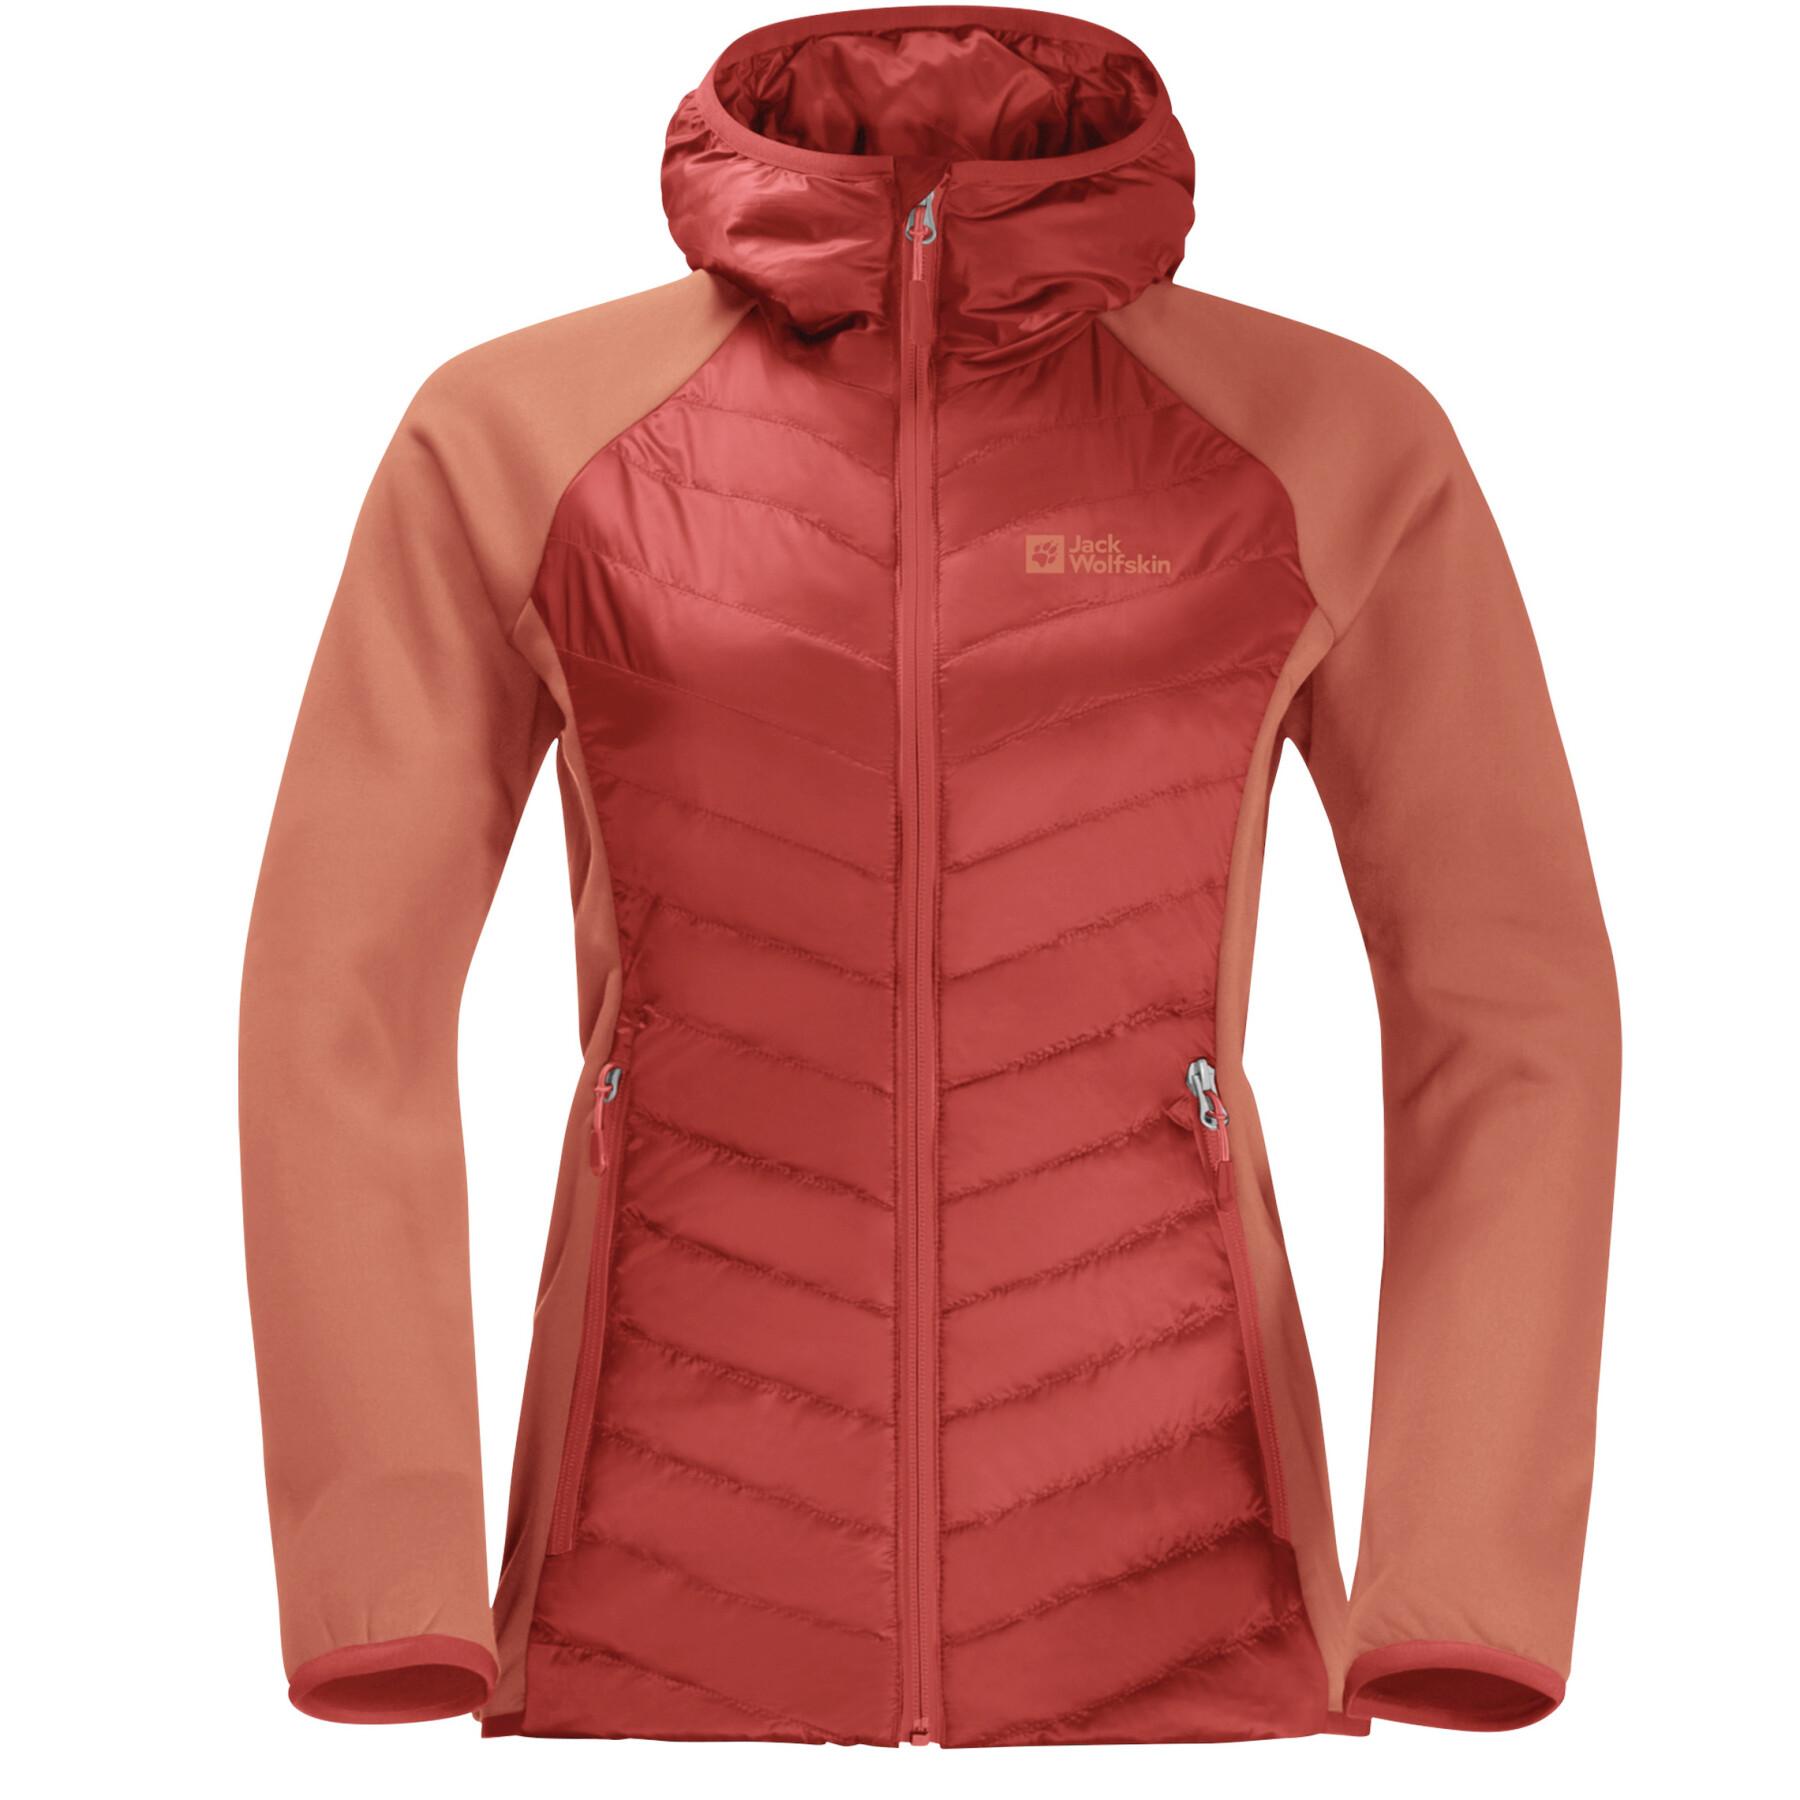 The - Hybrid Jackets Women\'s & - Wolfskin Heights - Routeburn Jack jacket Pro Windbreakers waterproof Clothing Mens